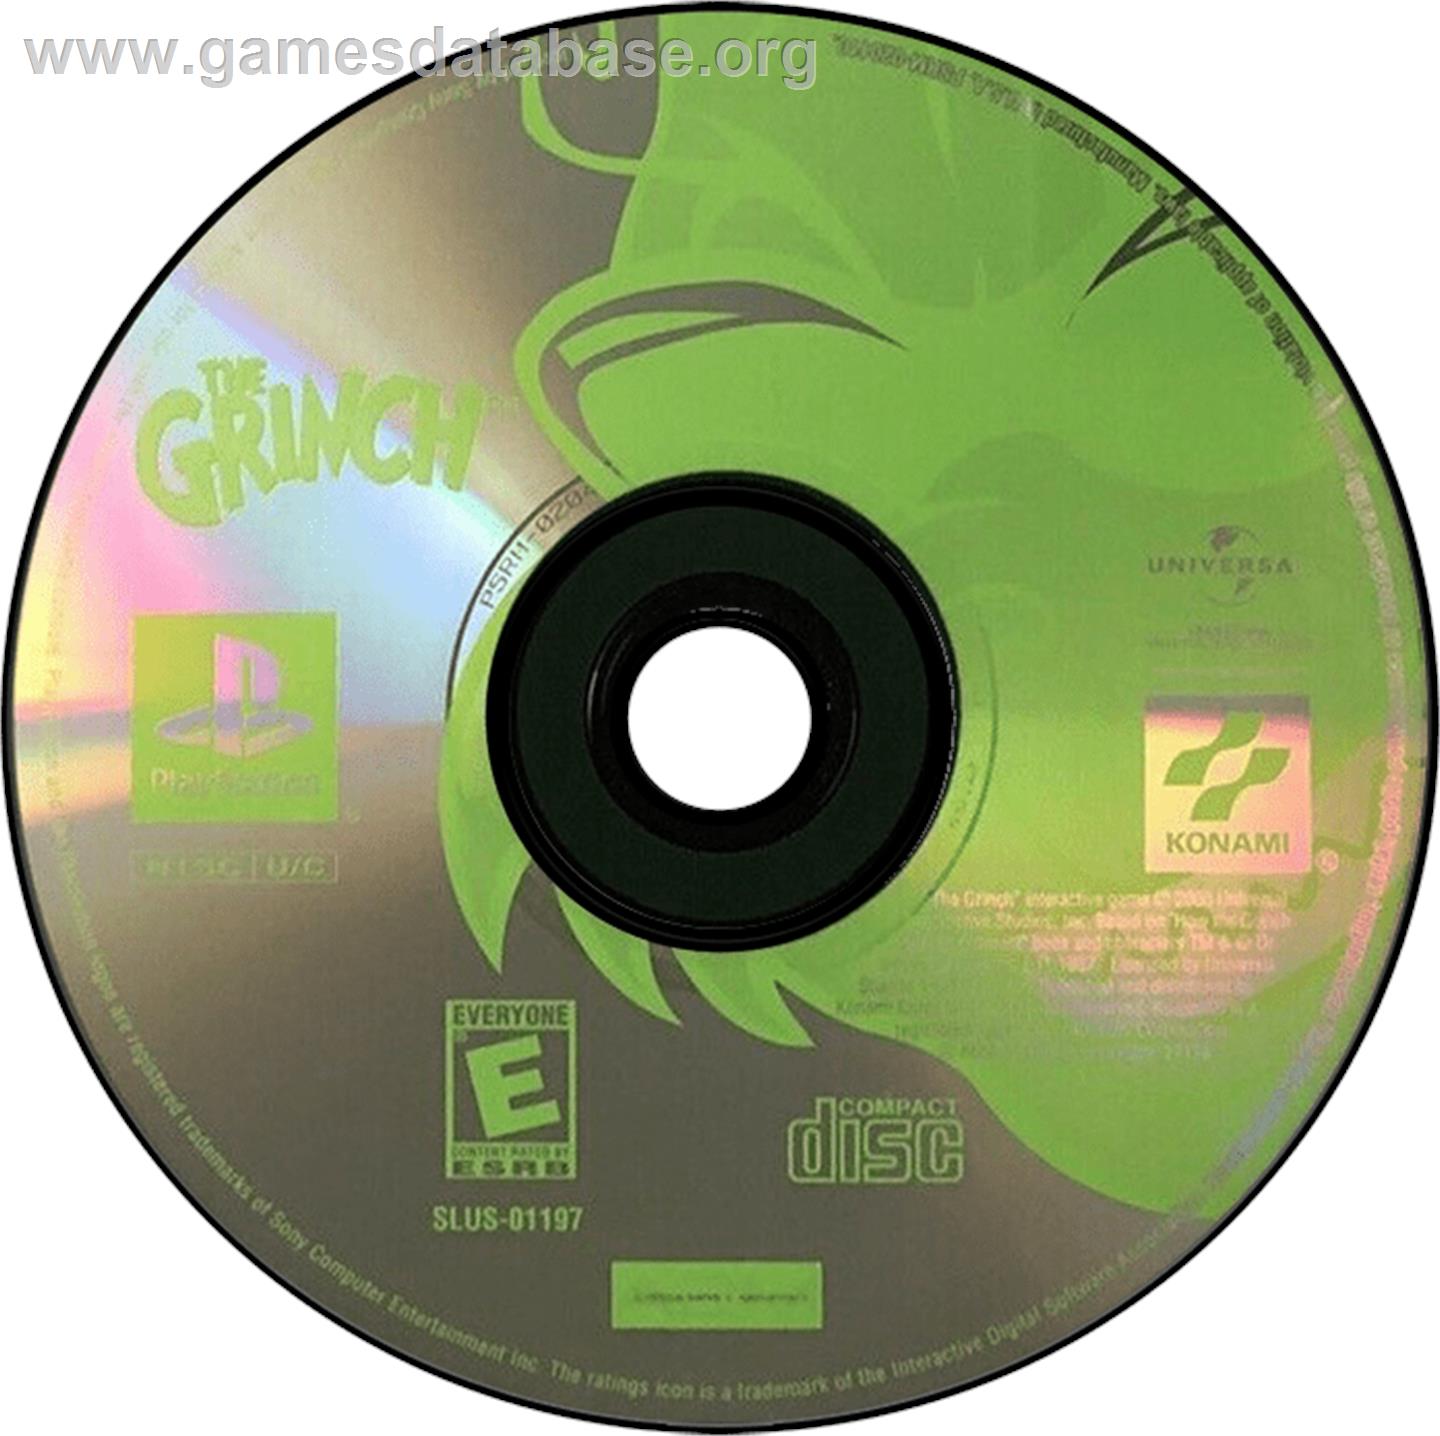 The Grinch - Sony Playstation - Artwork - Disc